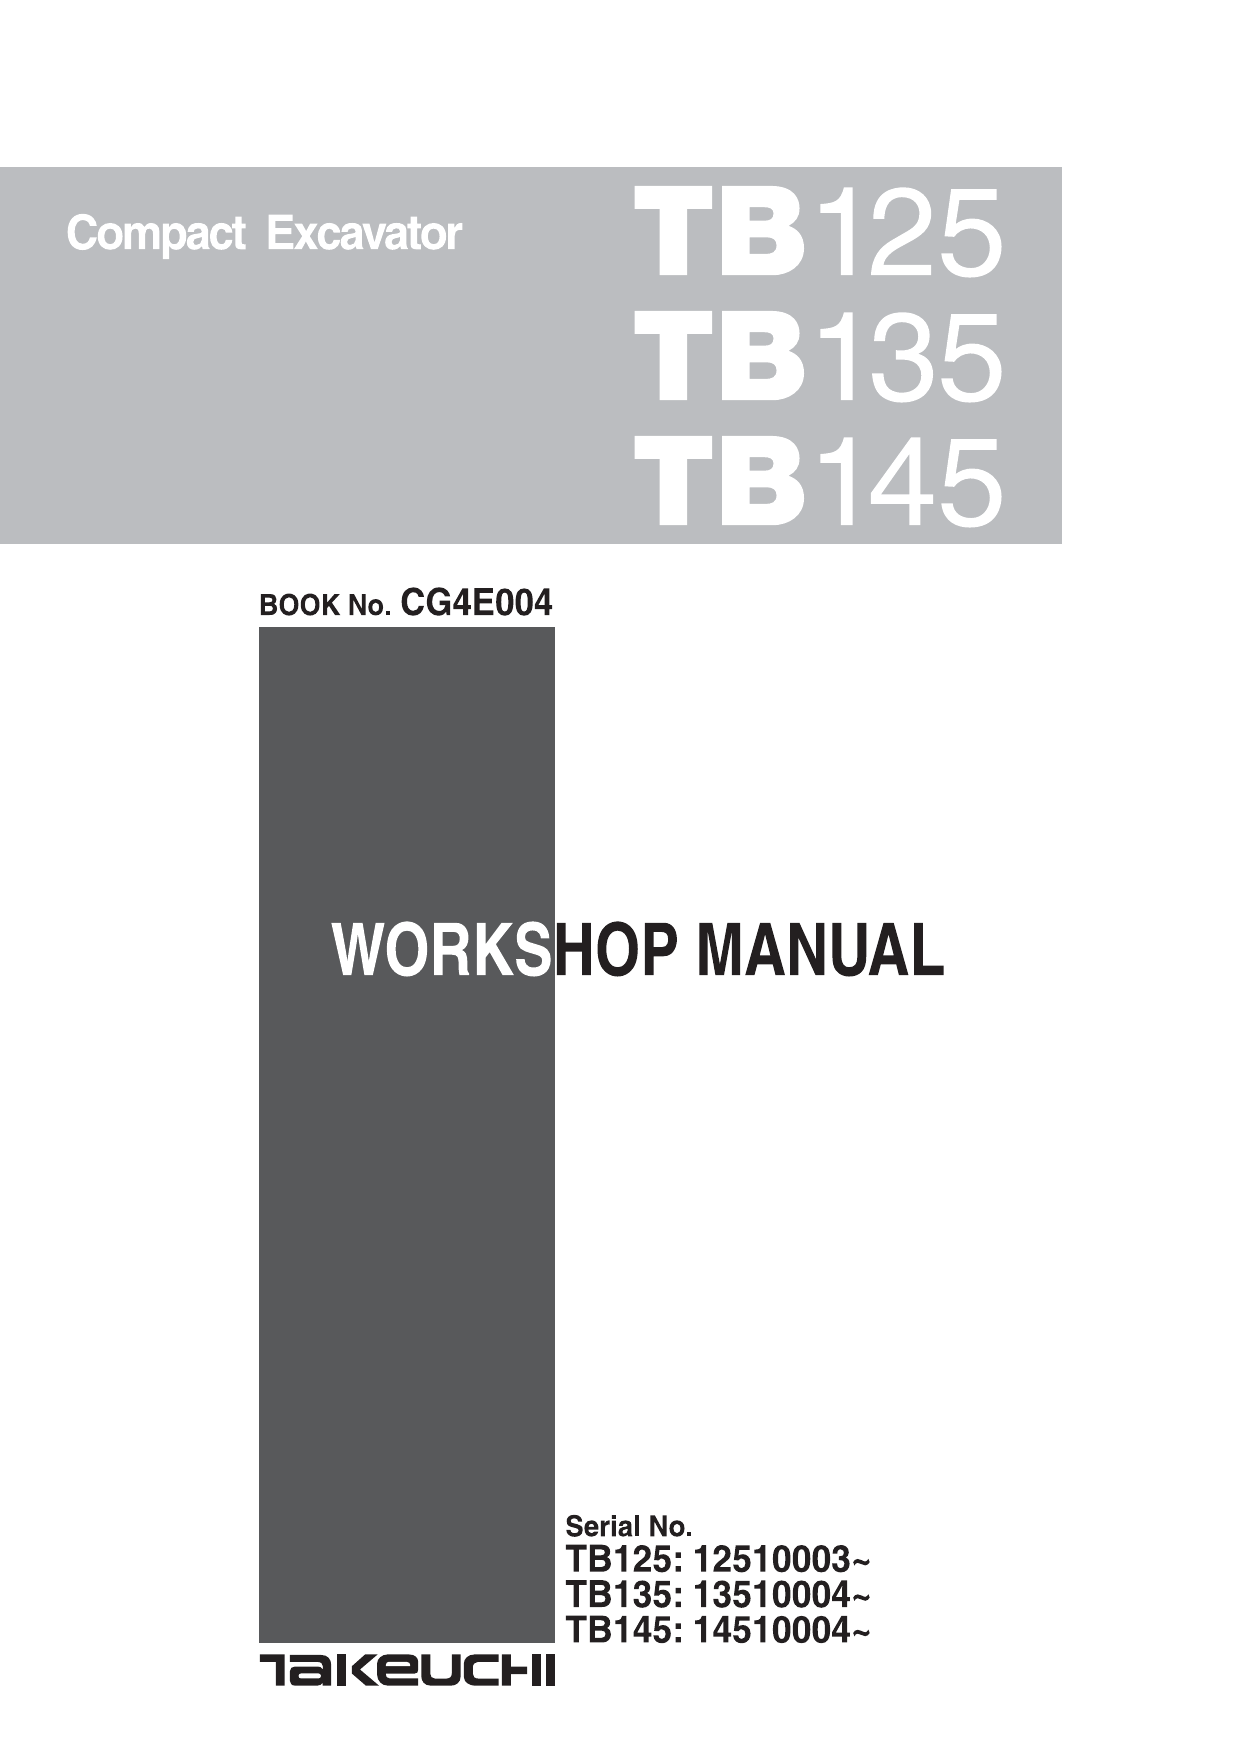 Takeuchi TB 145 compact excavator workshop manual Preview image 1